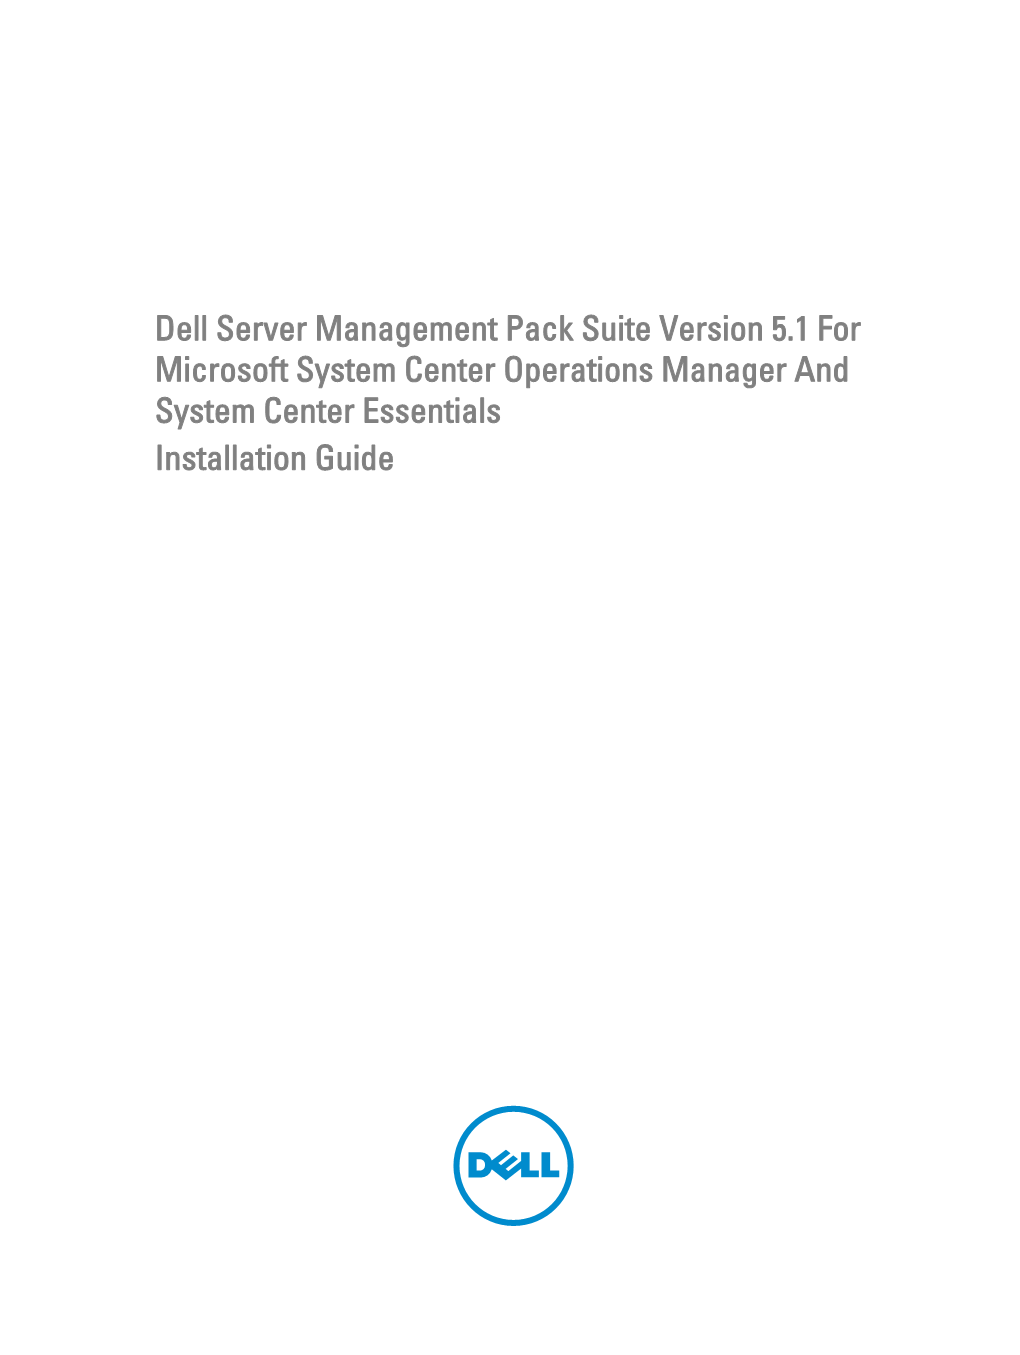 Dell Server Management Pack Suite Version 5.1 for Microsoft System